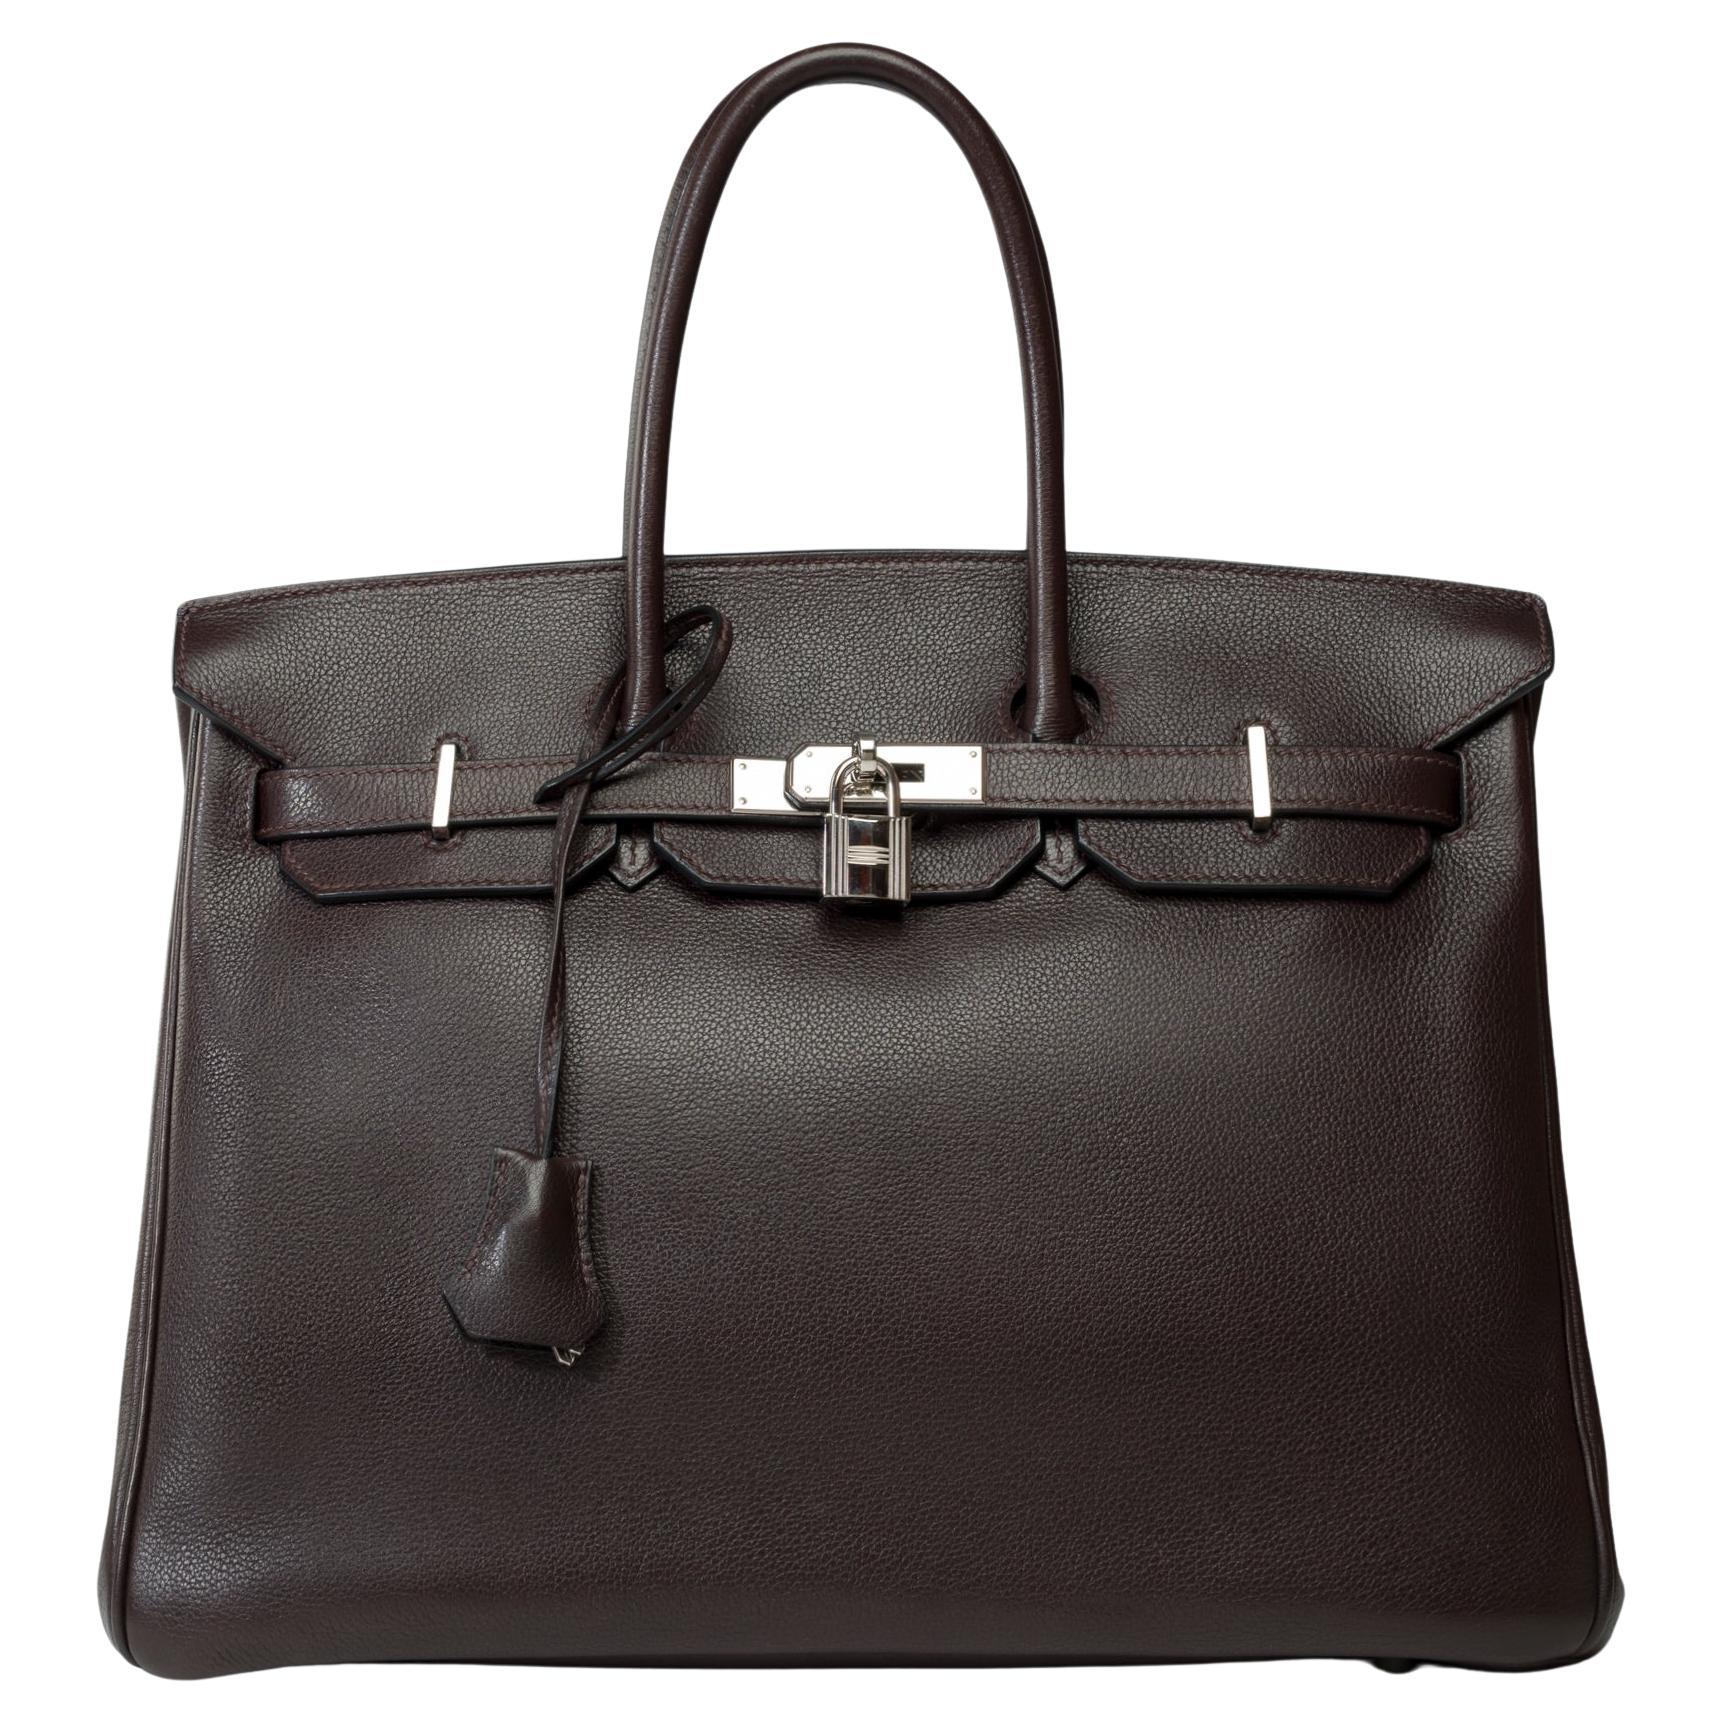 Amazing Hermès Birkin 35 handbag in grained calf leather Evergrain brown , SHW For Sale